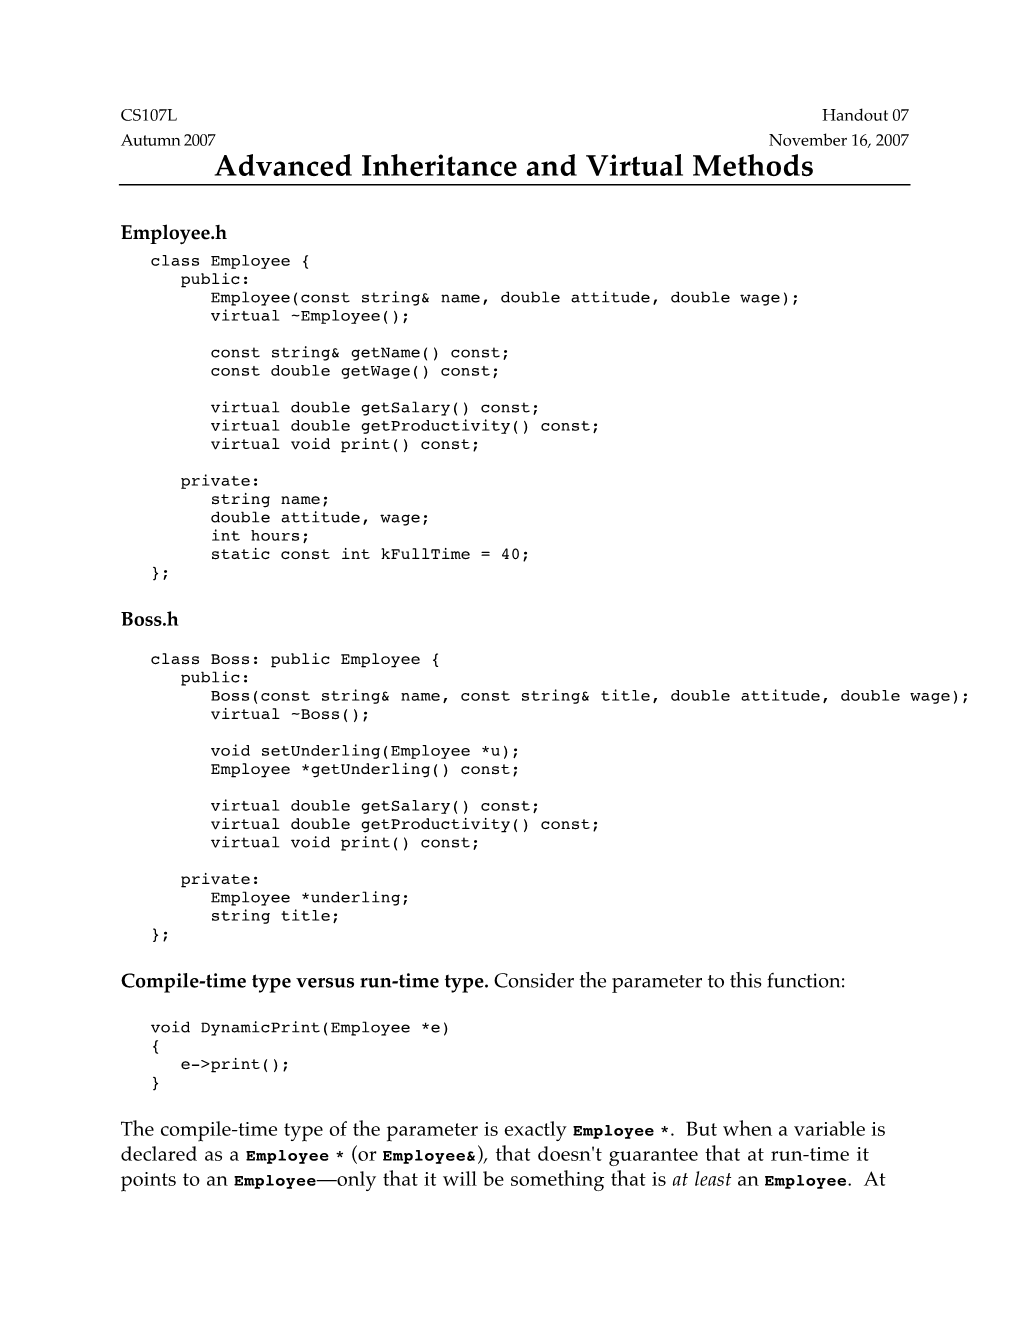 Advanced Inheritance and Virtual Methods